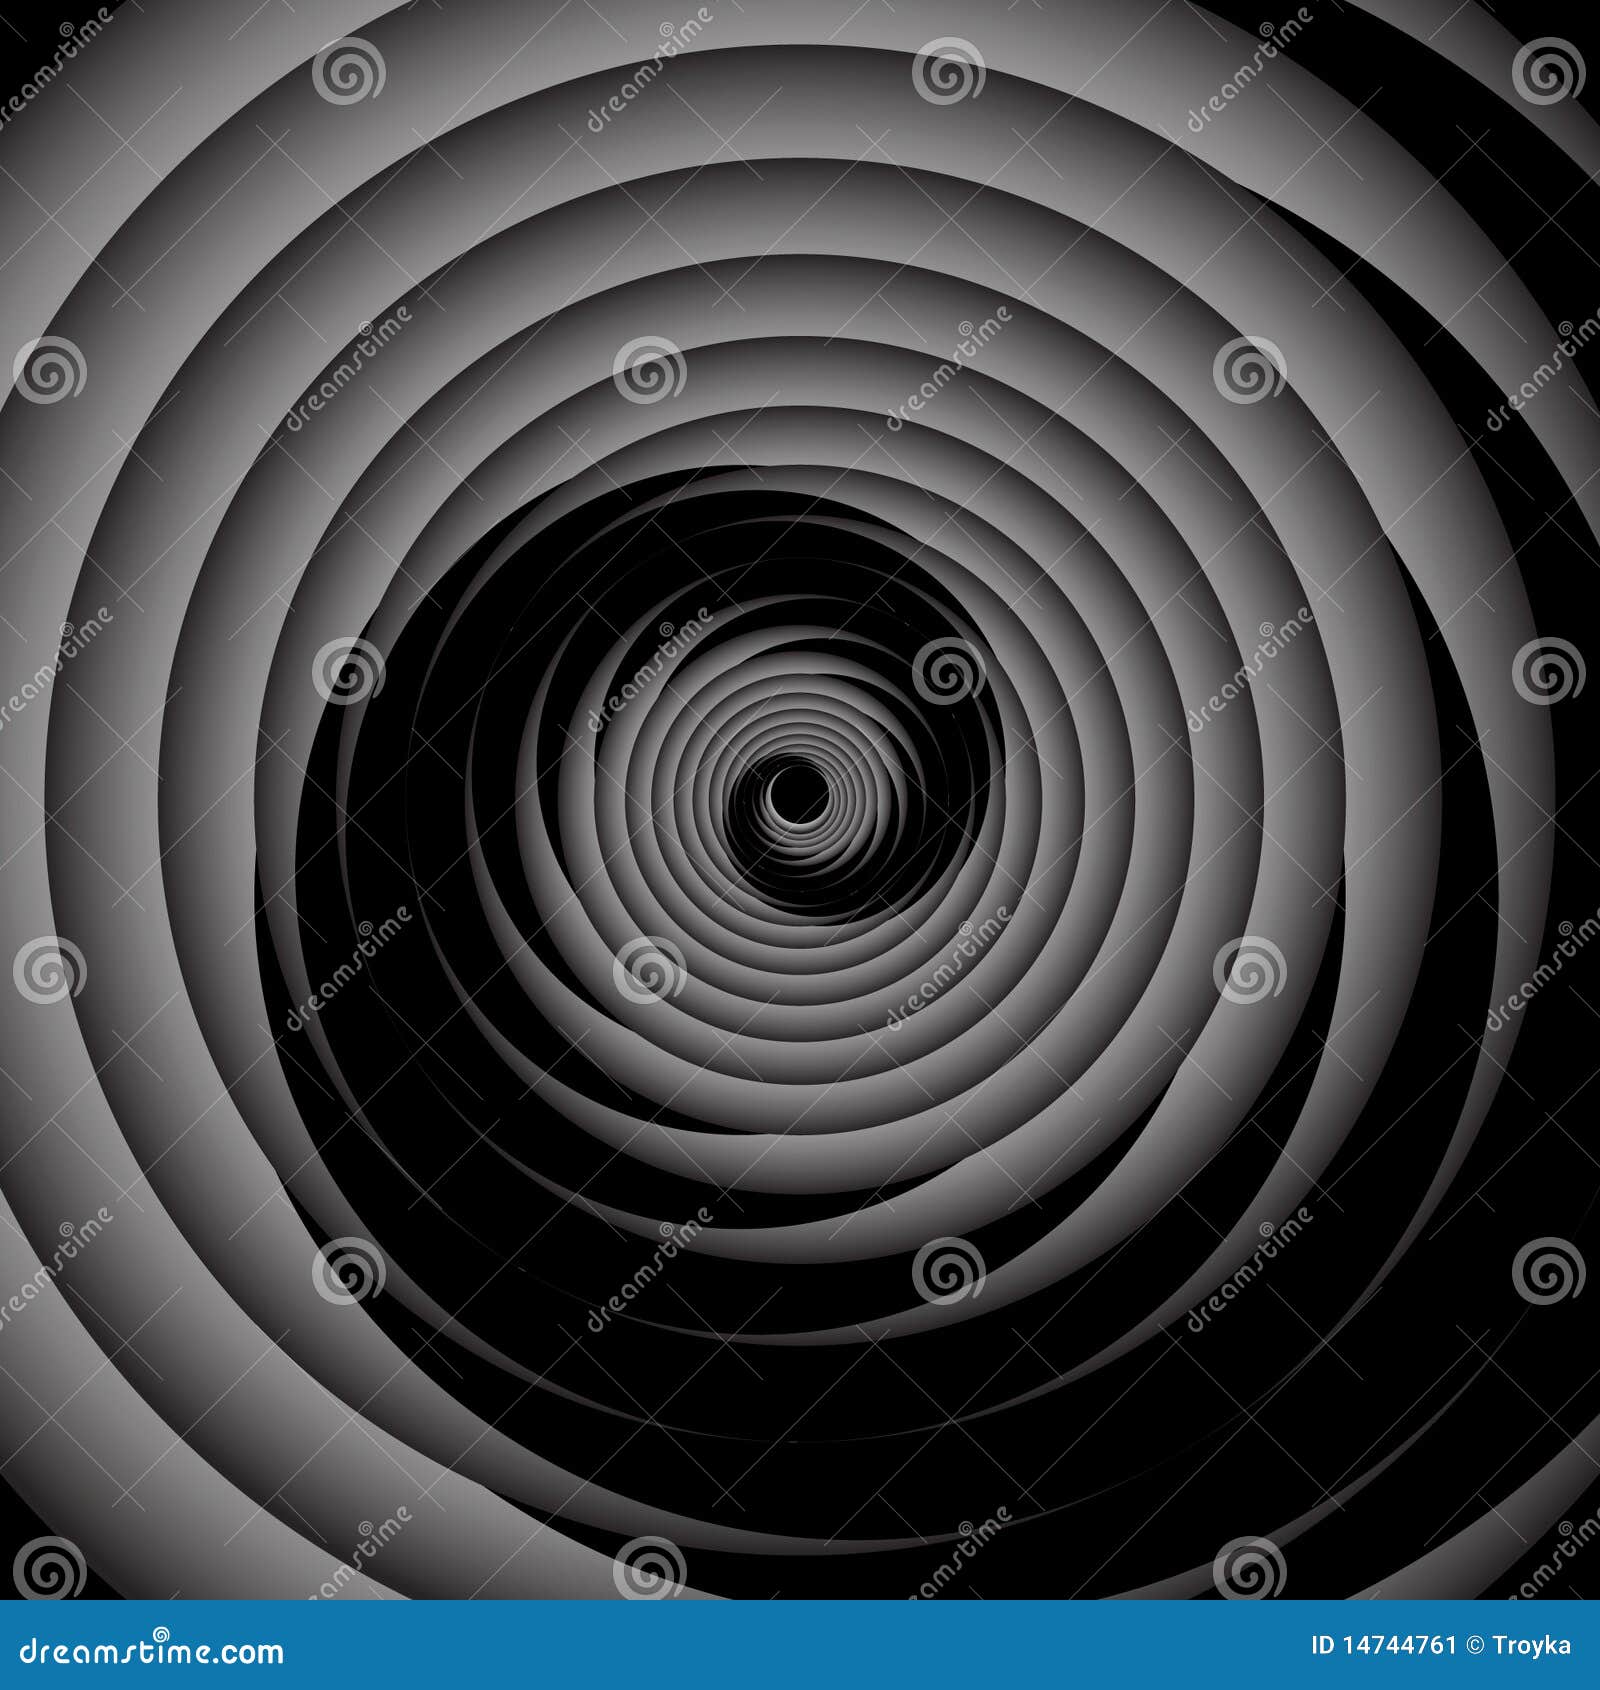 Spiral motion #6. stock vector. Illustration of turbulence - 14744761